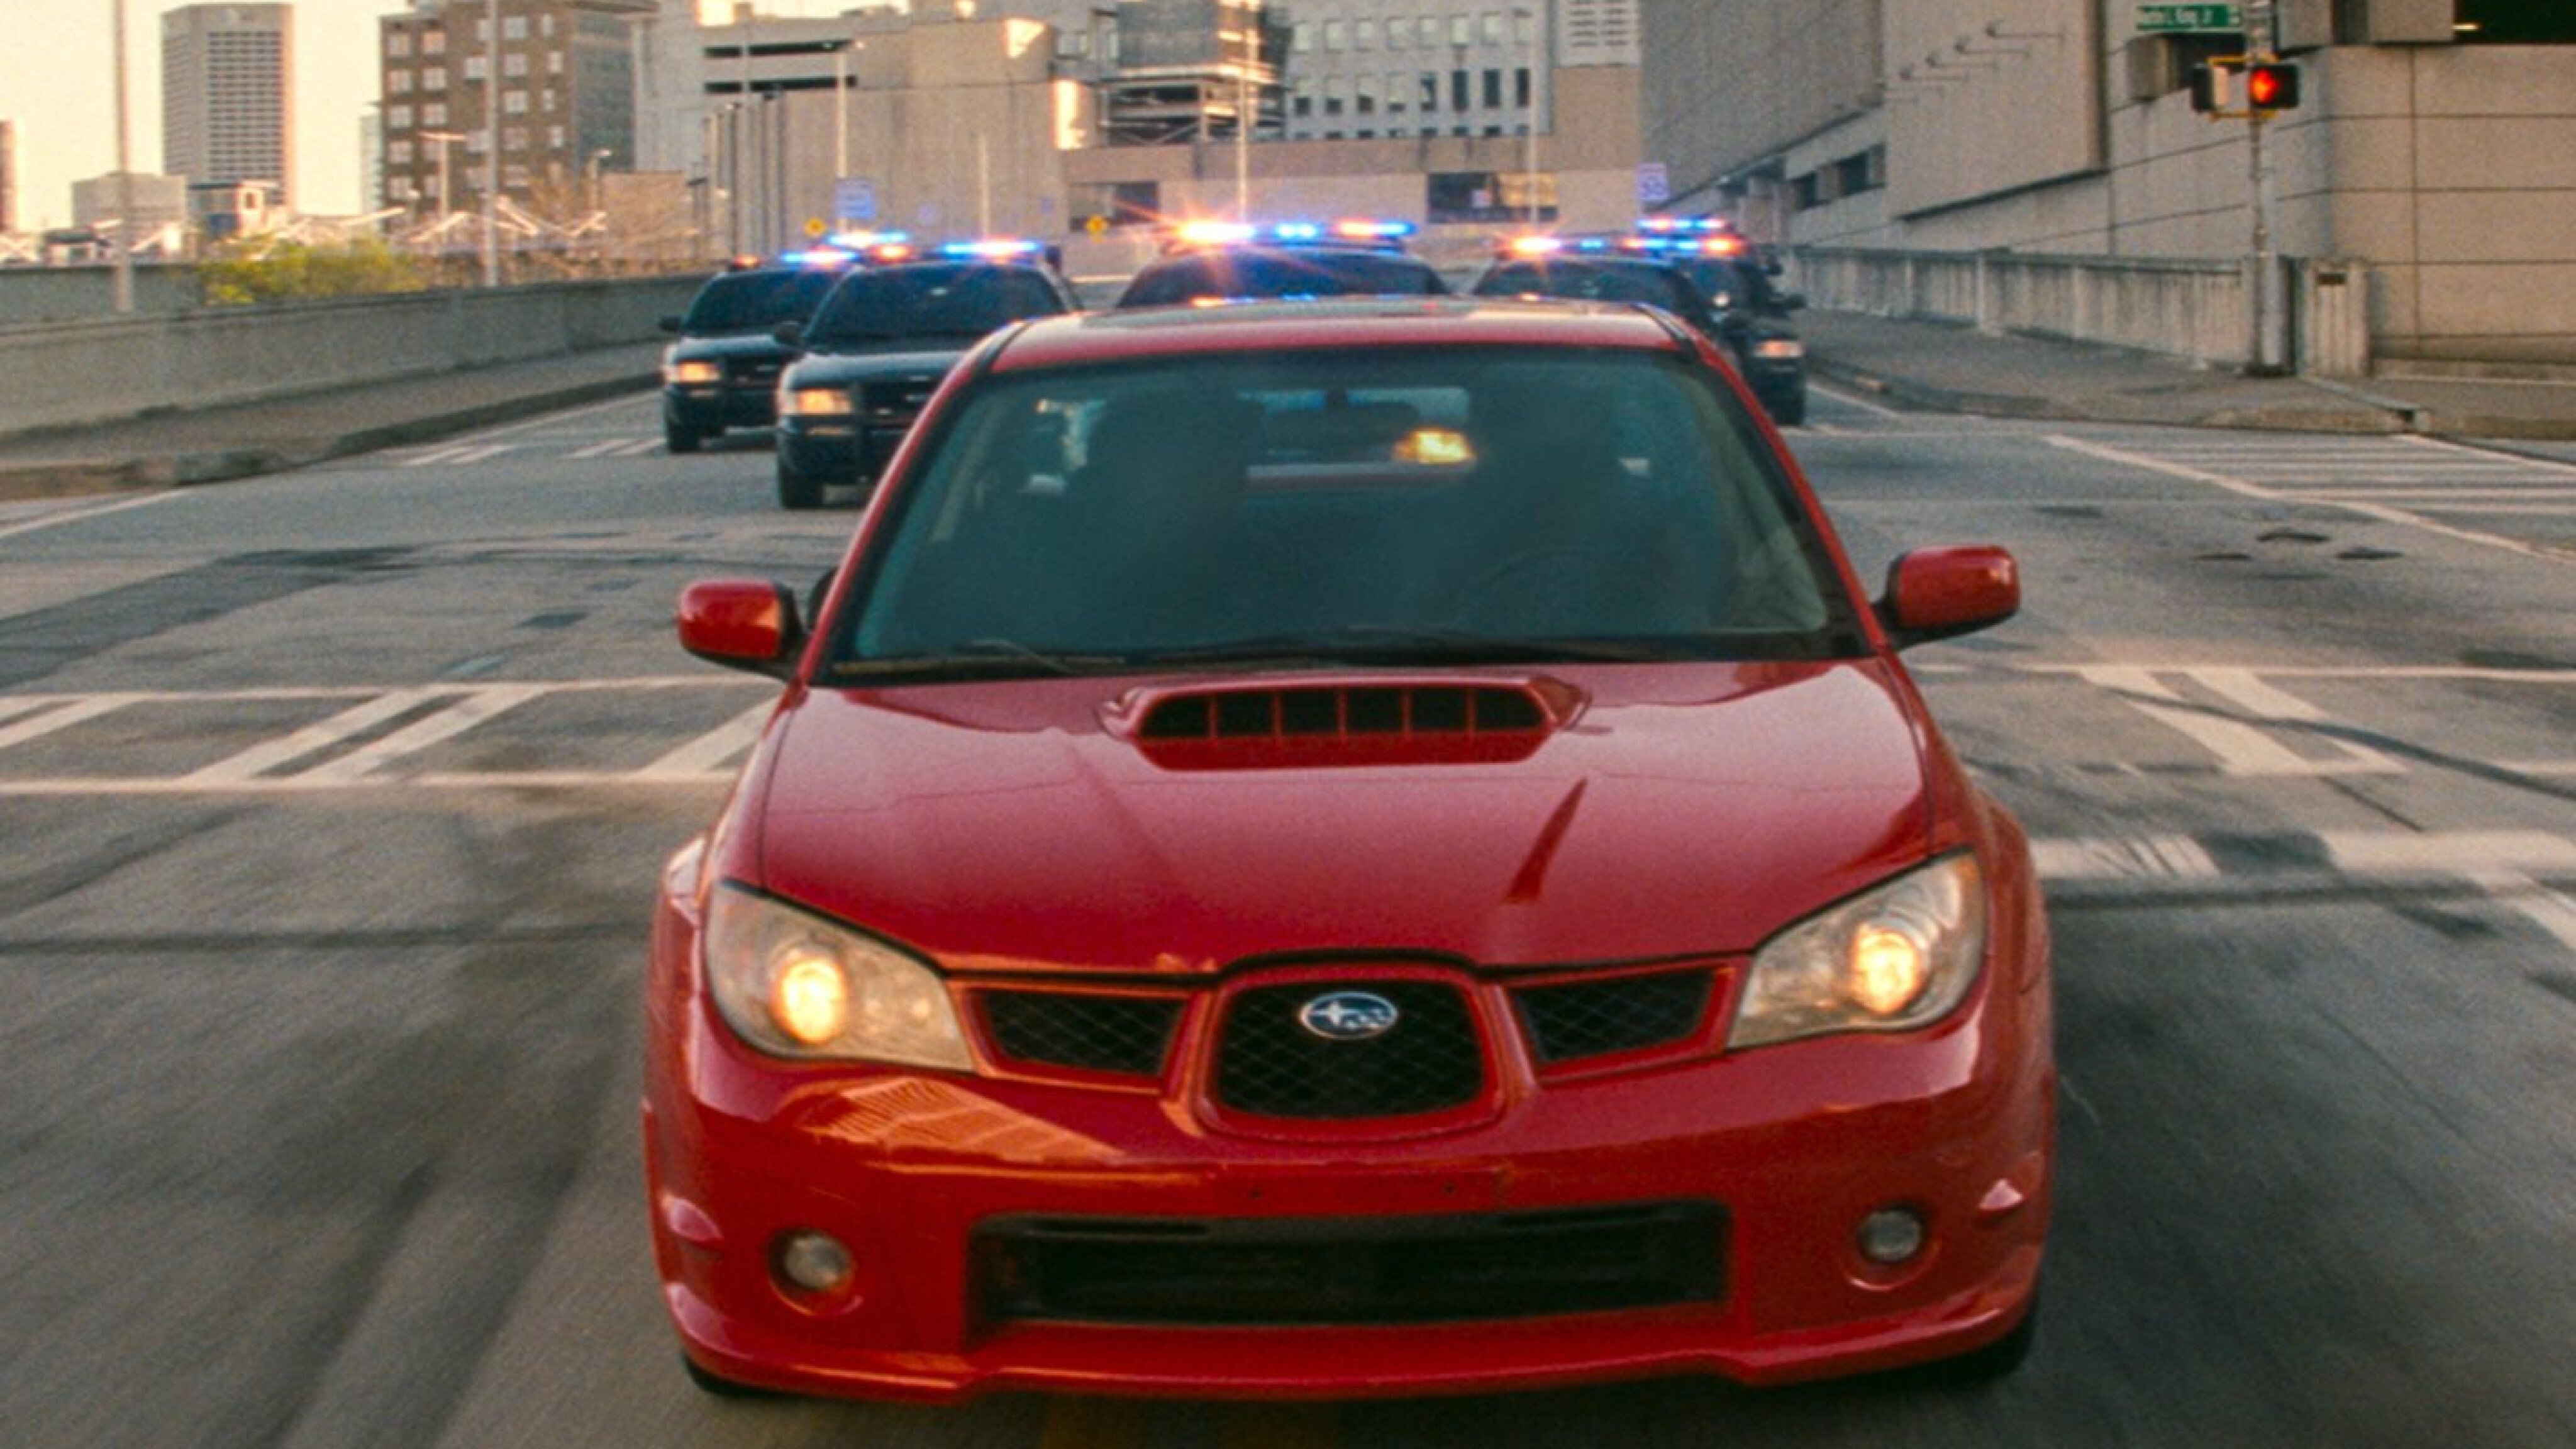 Baby Driver's Subaru WRX getaway scene is epic